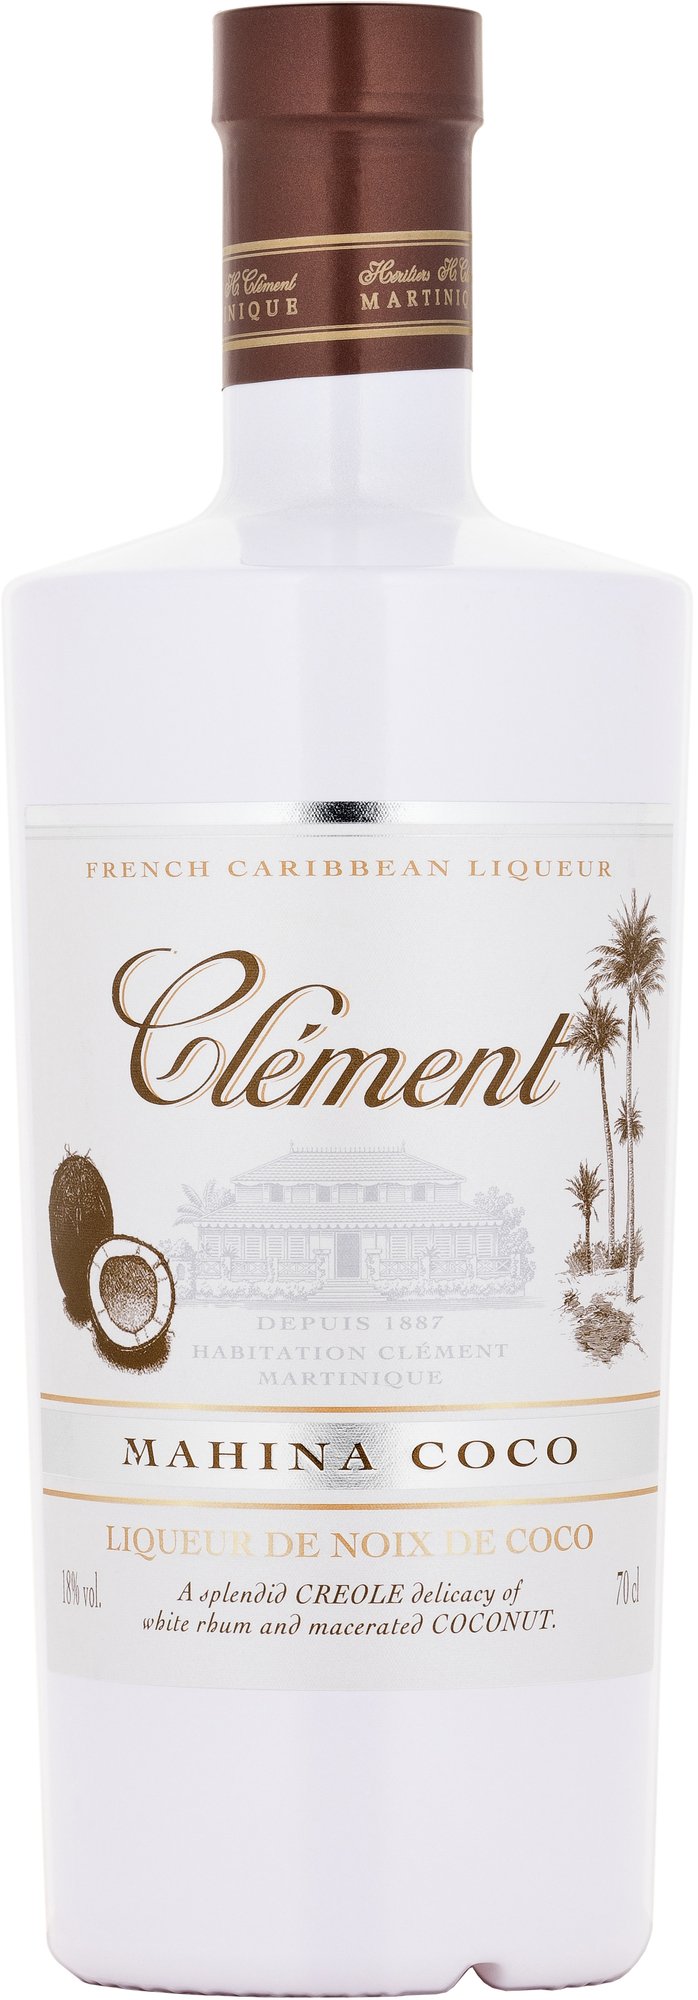 Clément Mahina Coco Liqueur 18% 0,7l (čistá fľaša)